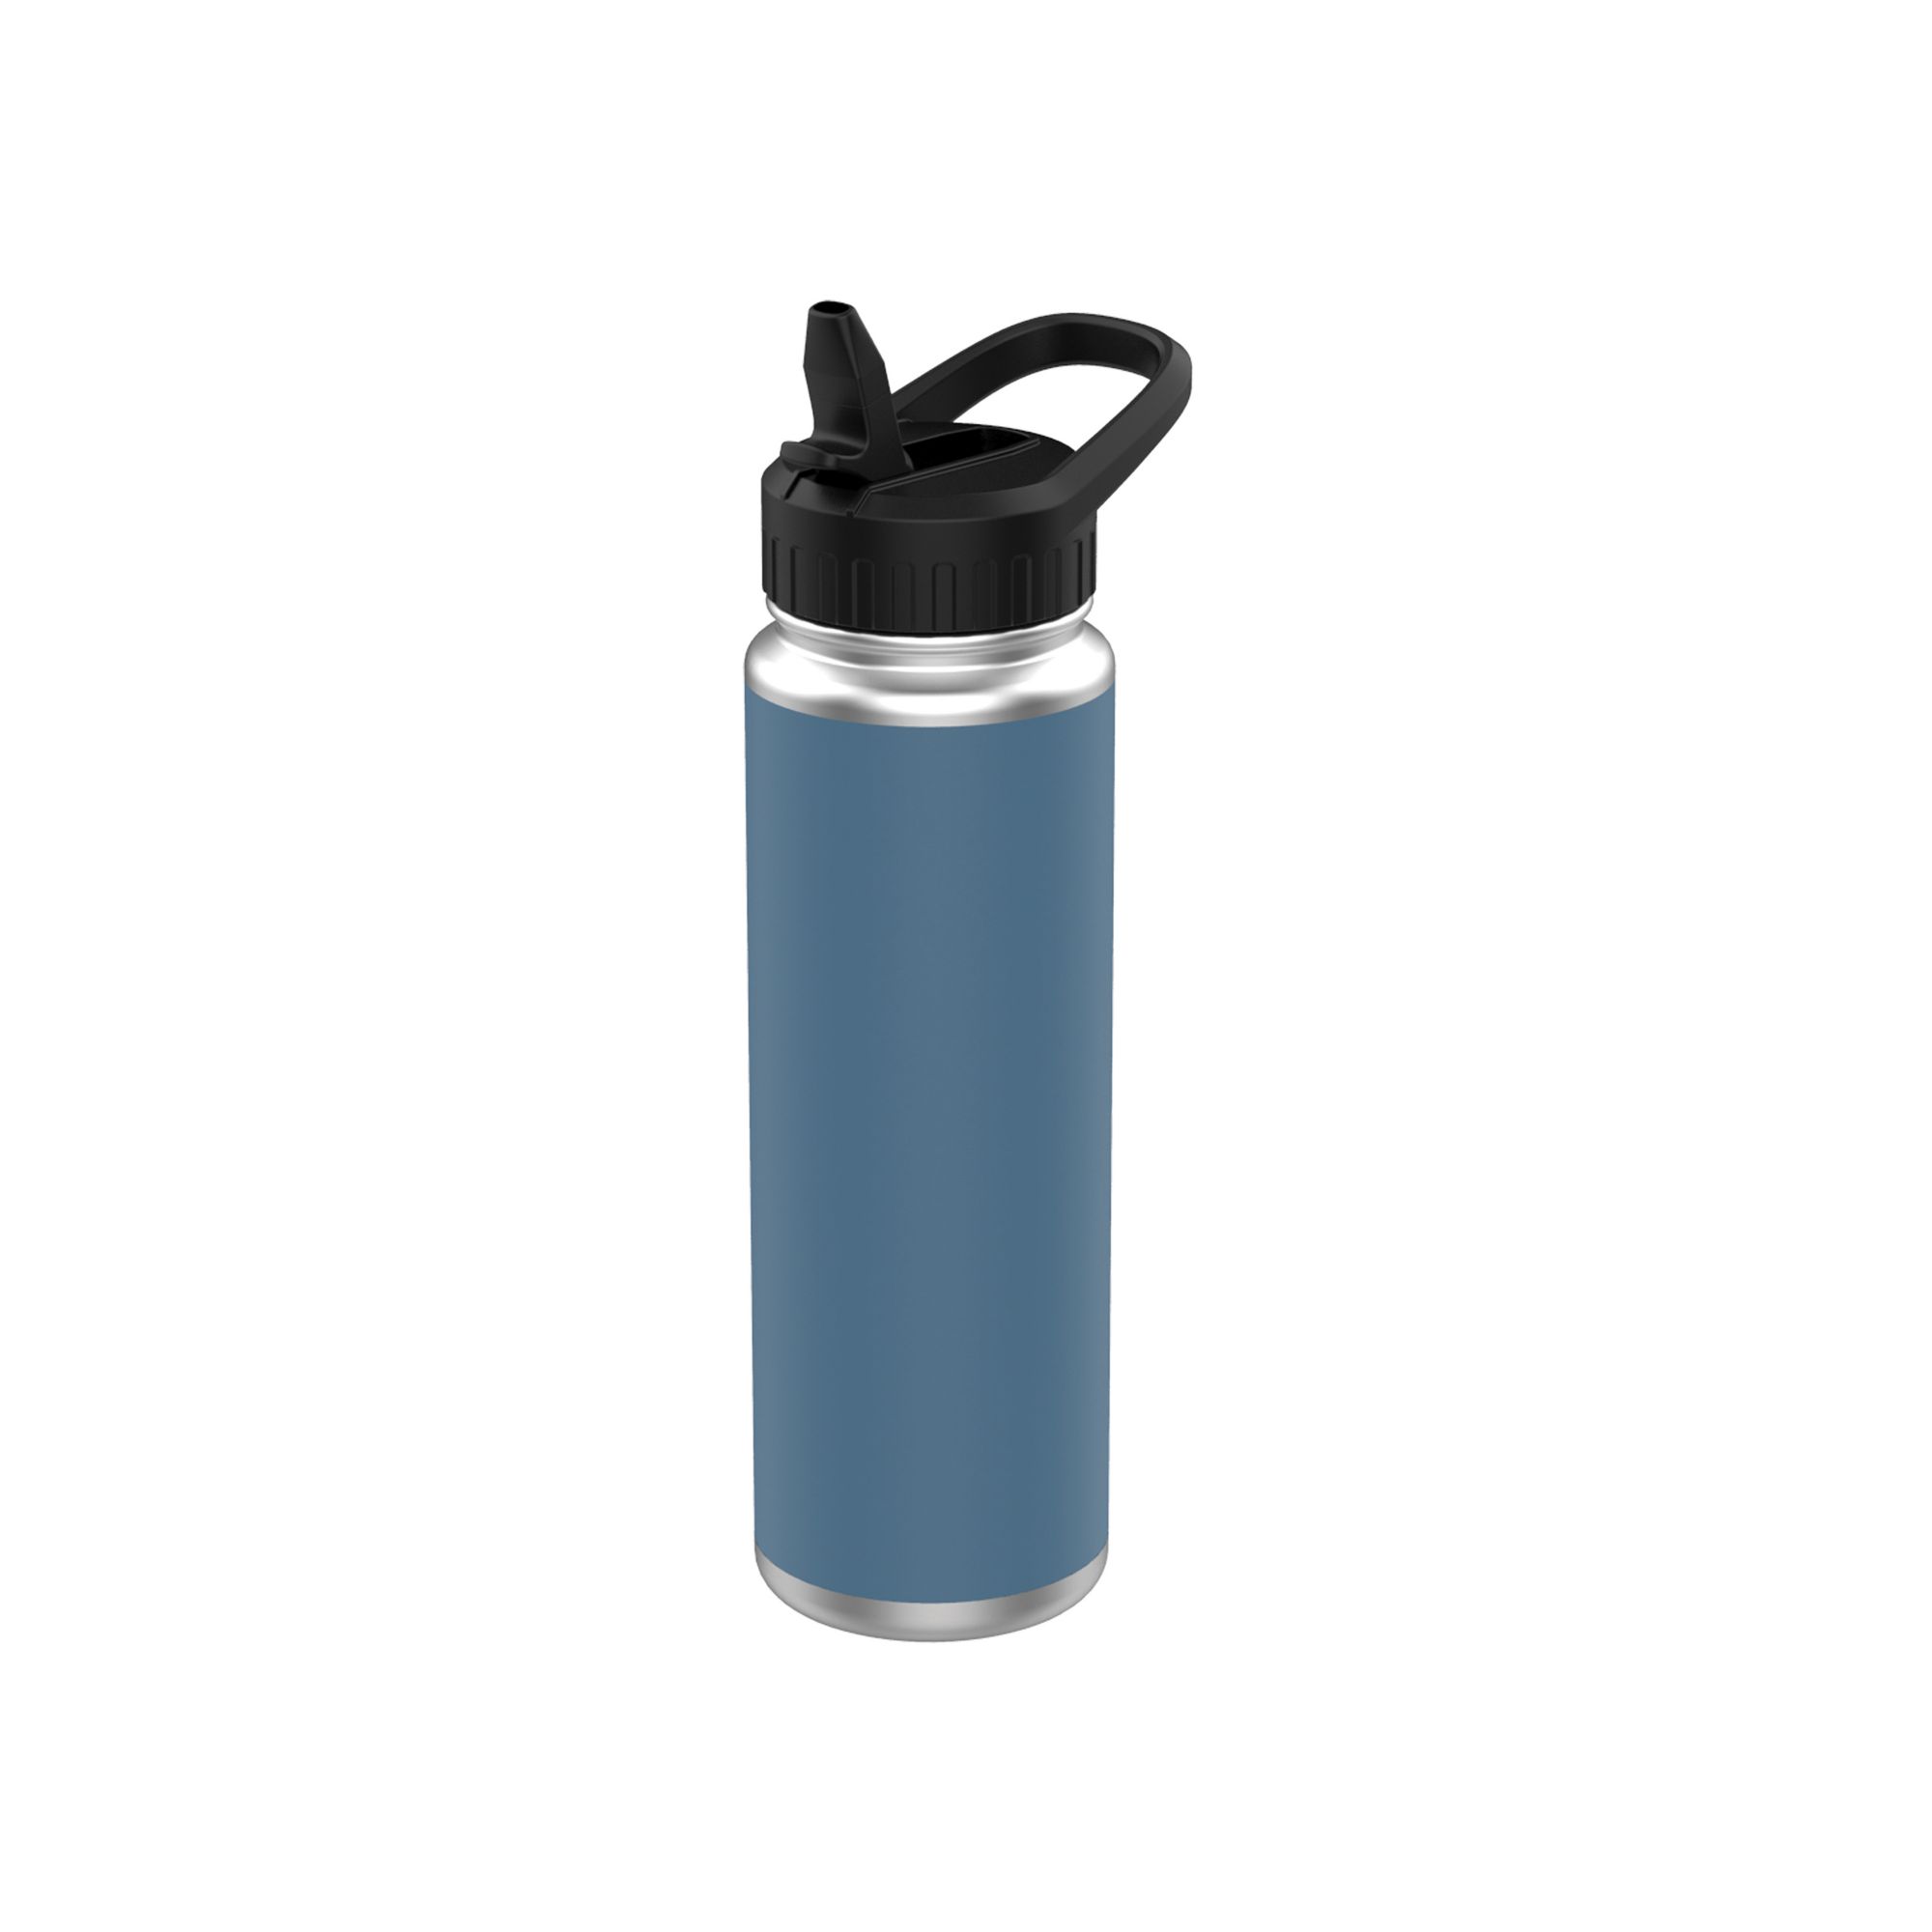 Owala FreeSip Stainless Steel Water Bottle, 24oz Navy Blue 